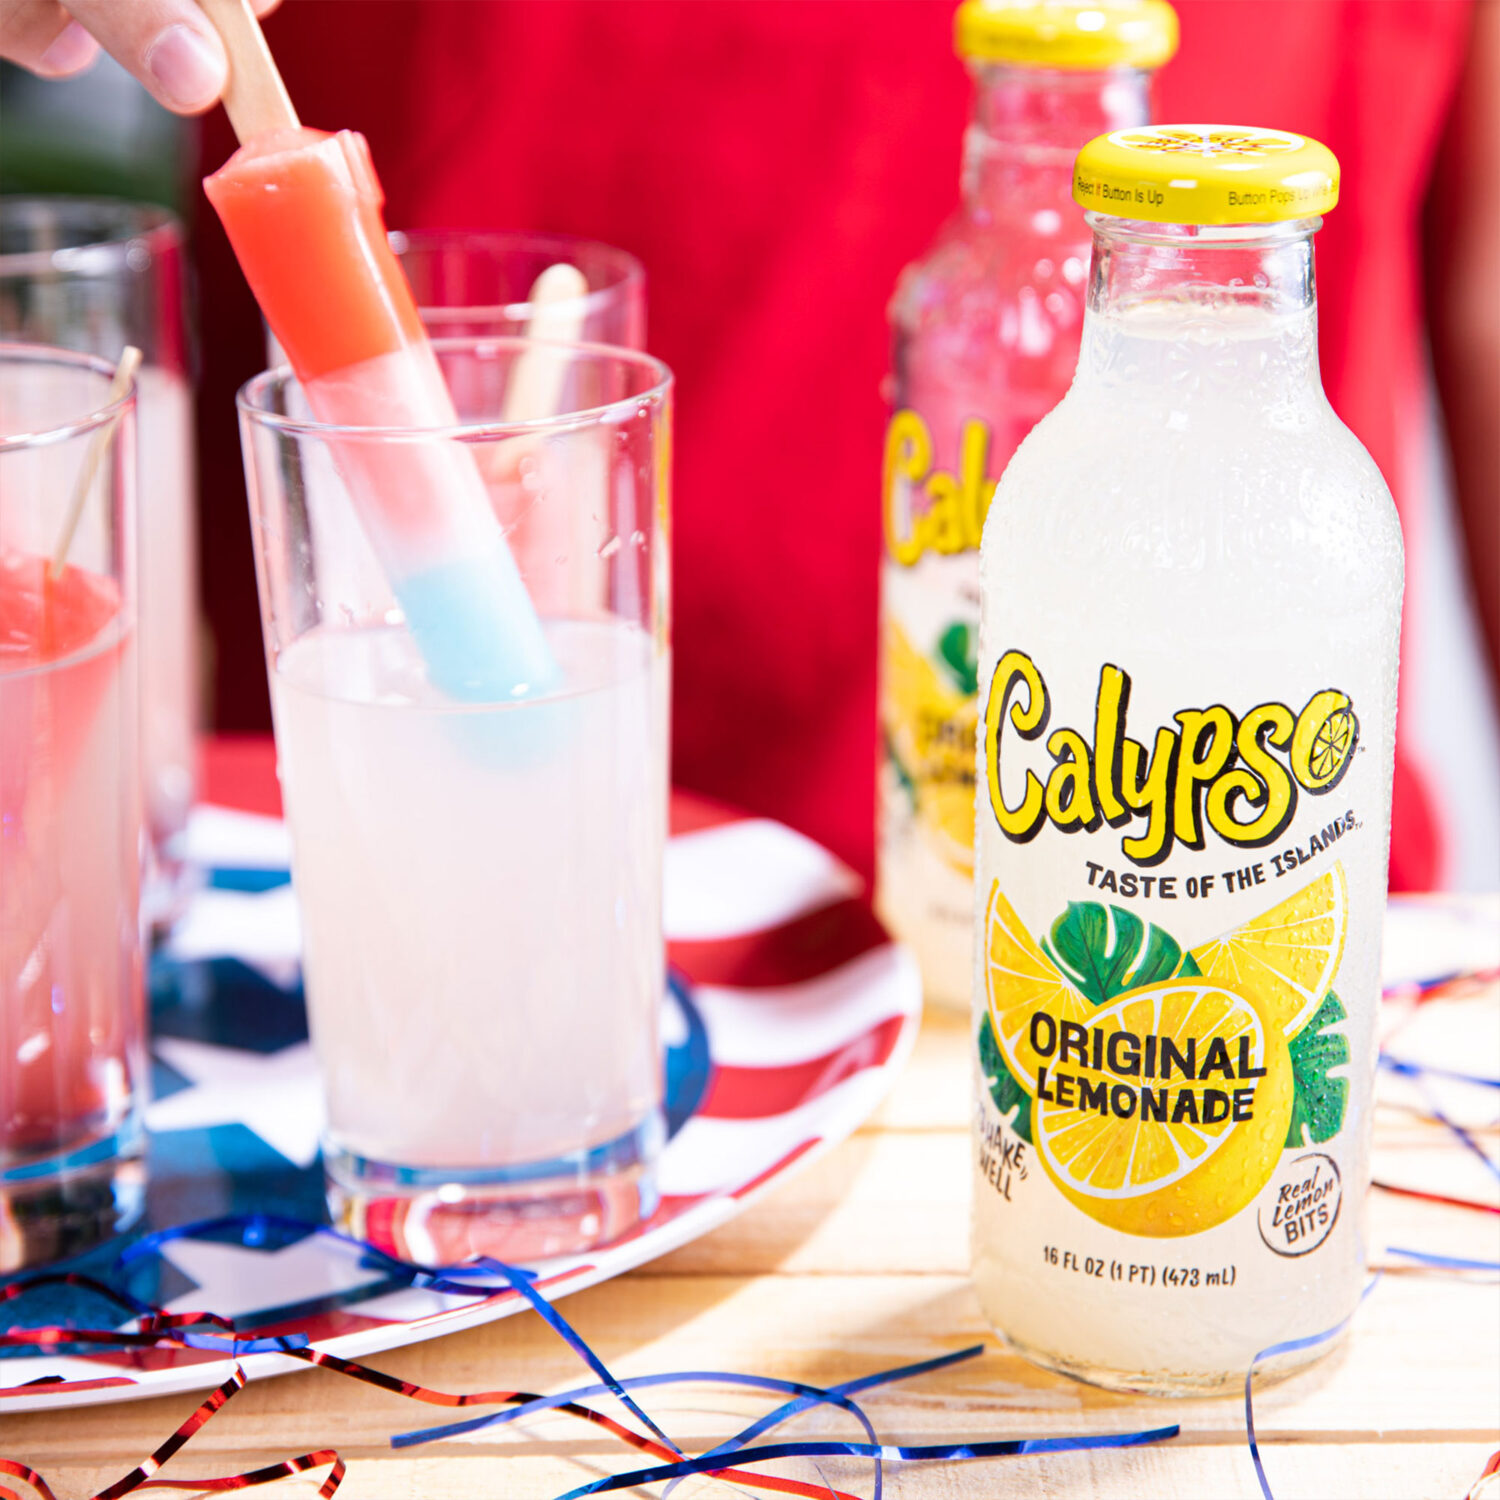 Calypso Original Lemonade with popsicles on a table.